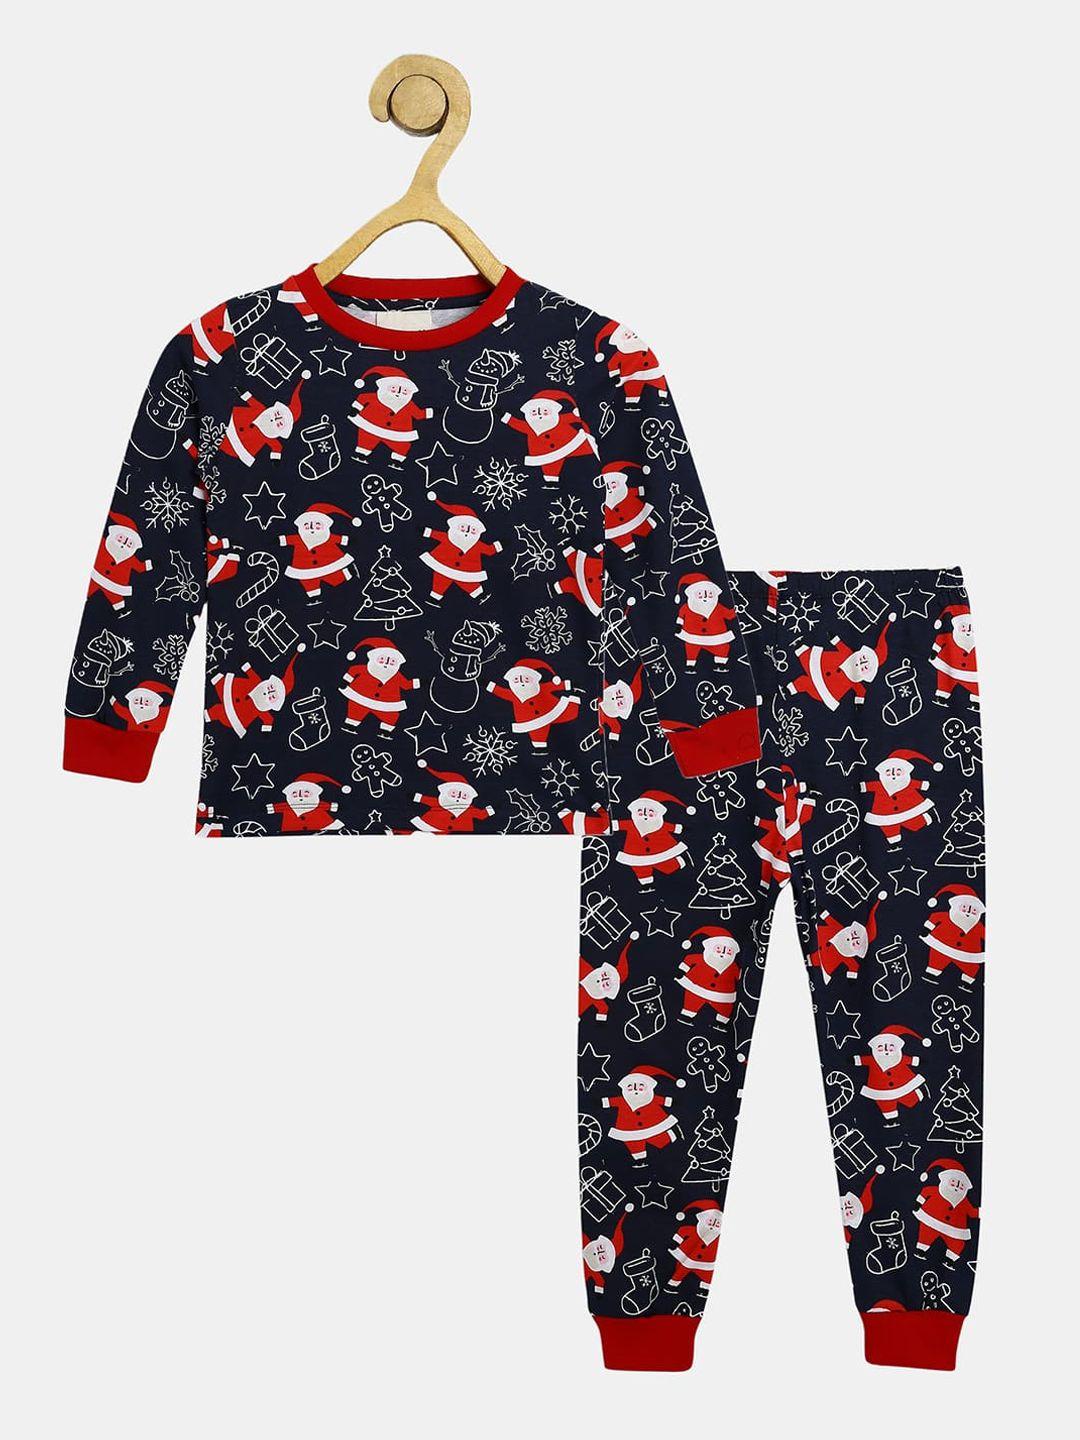 wyld sprog unisex kids santa print t-shirt & pyjama pure cotton night suit